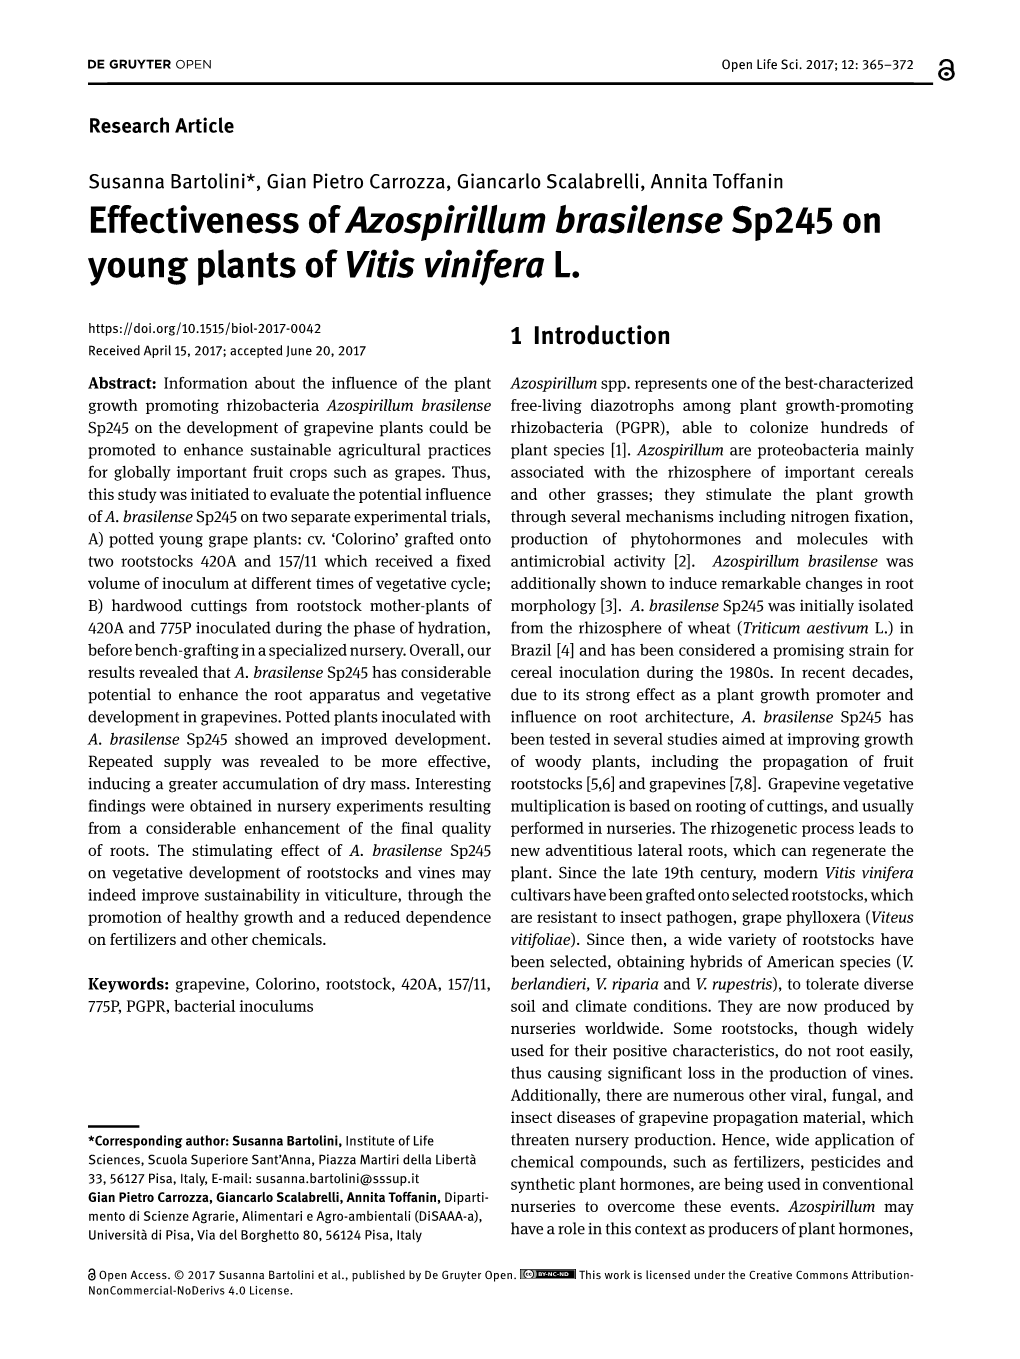 Effectiveness of Azospirillum Brasilense Sp245 on Young Plants of Vitis Vinifera L